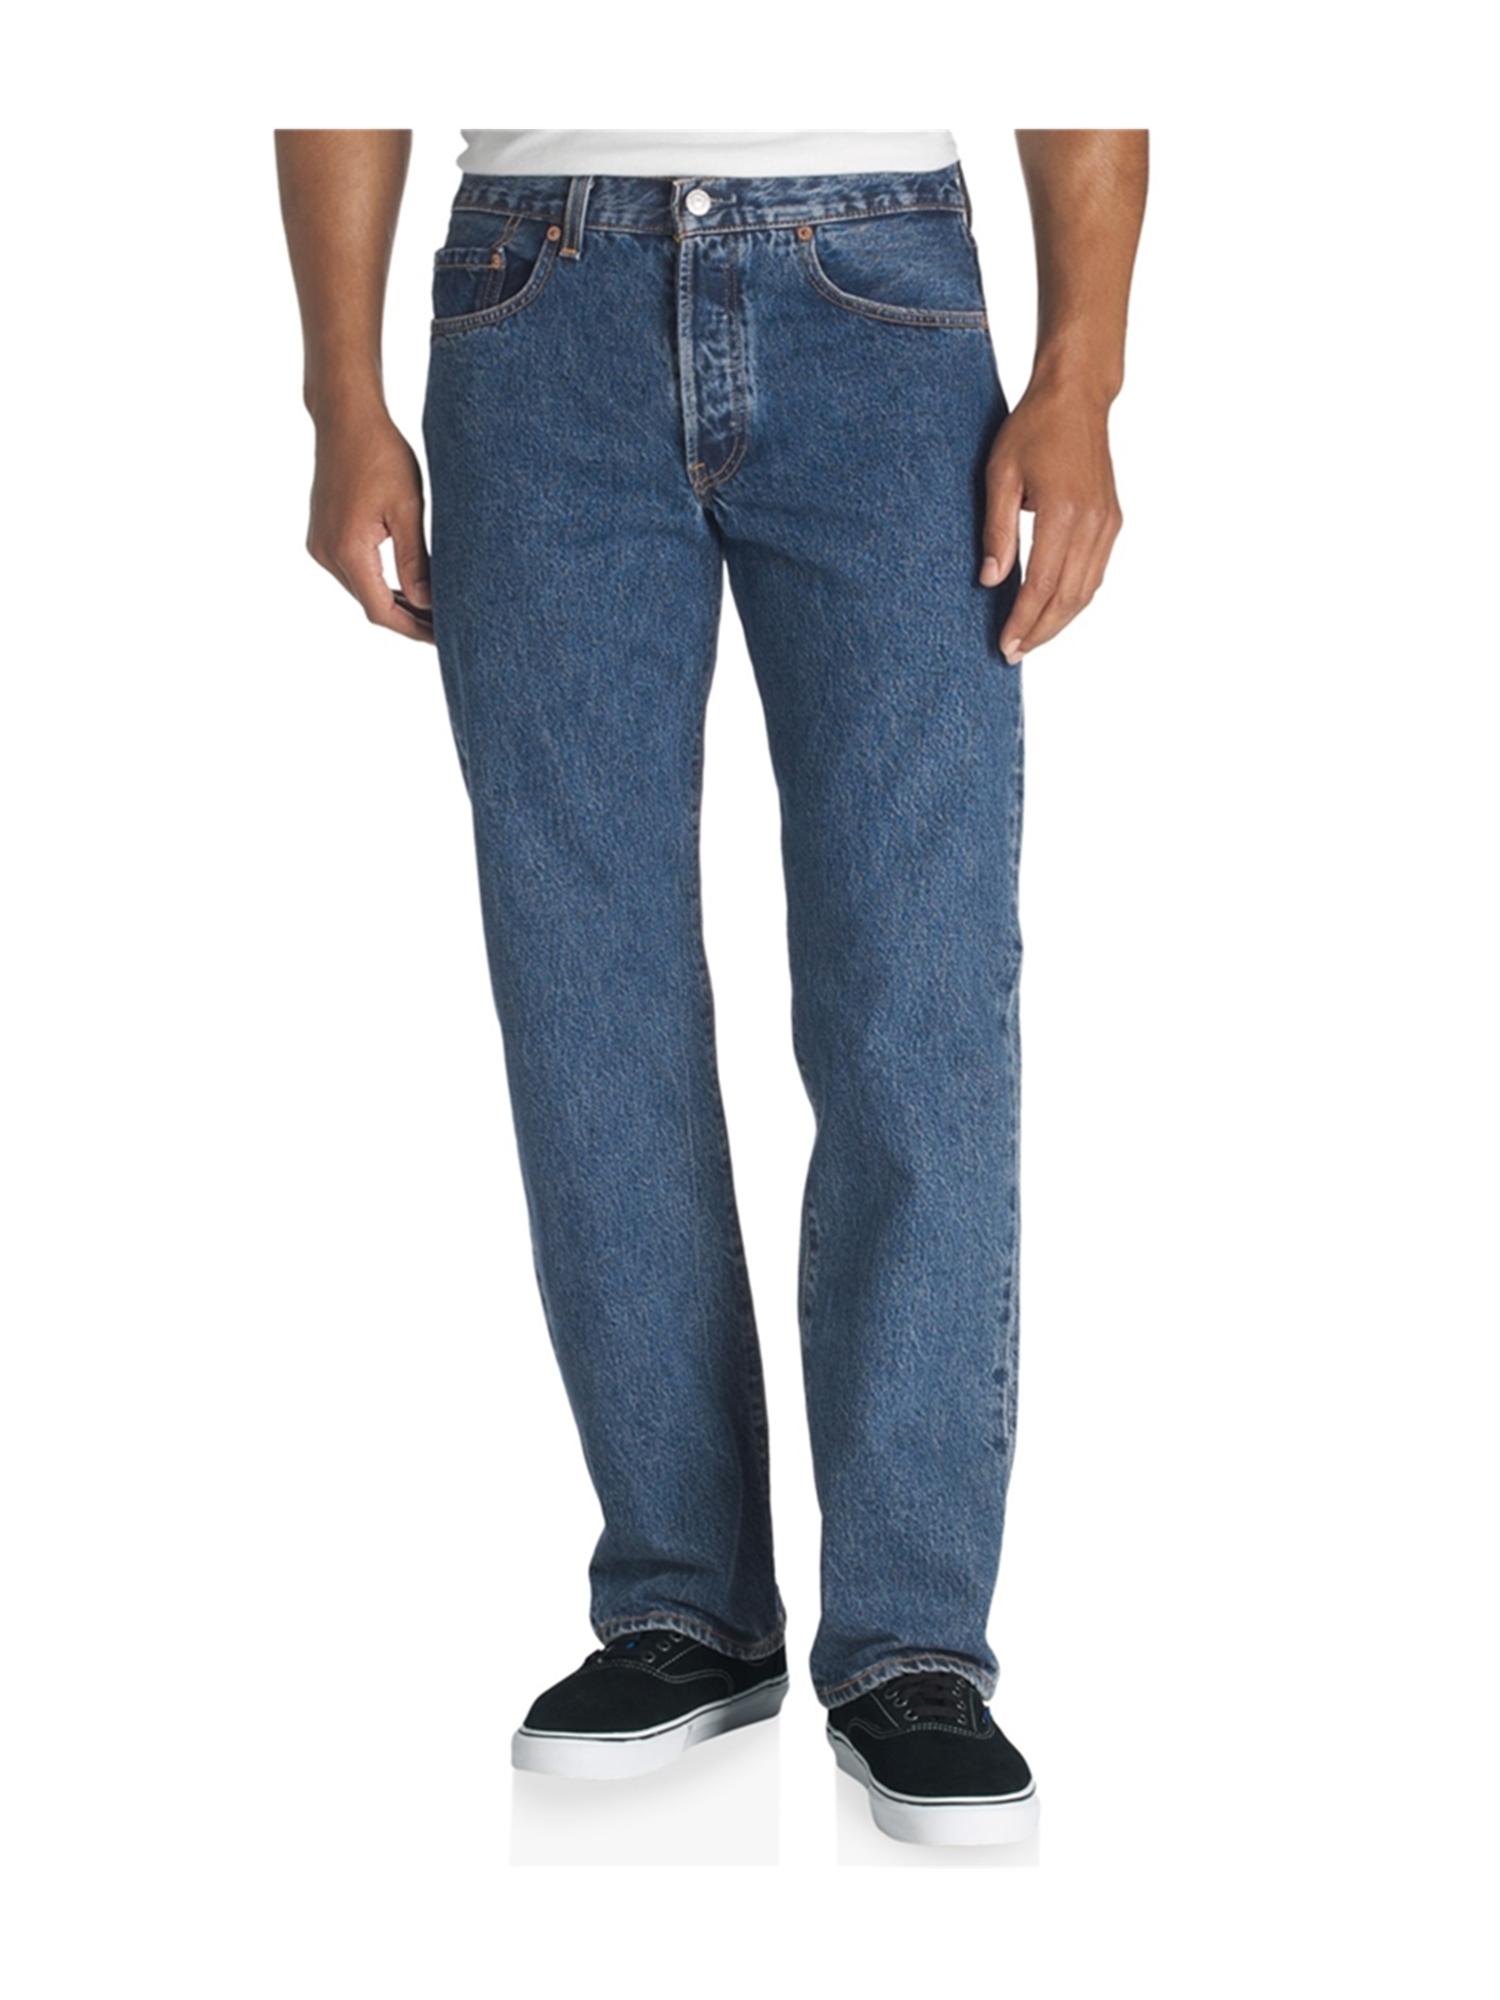 Levi's Mens Classic 501 Denim Straight Leg Jeans darkstonewash 36x30 ...